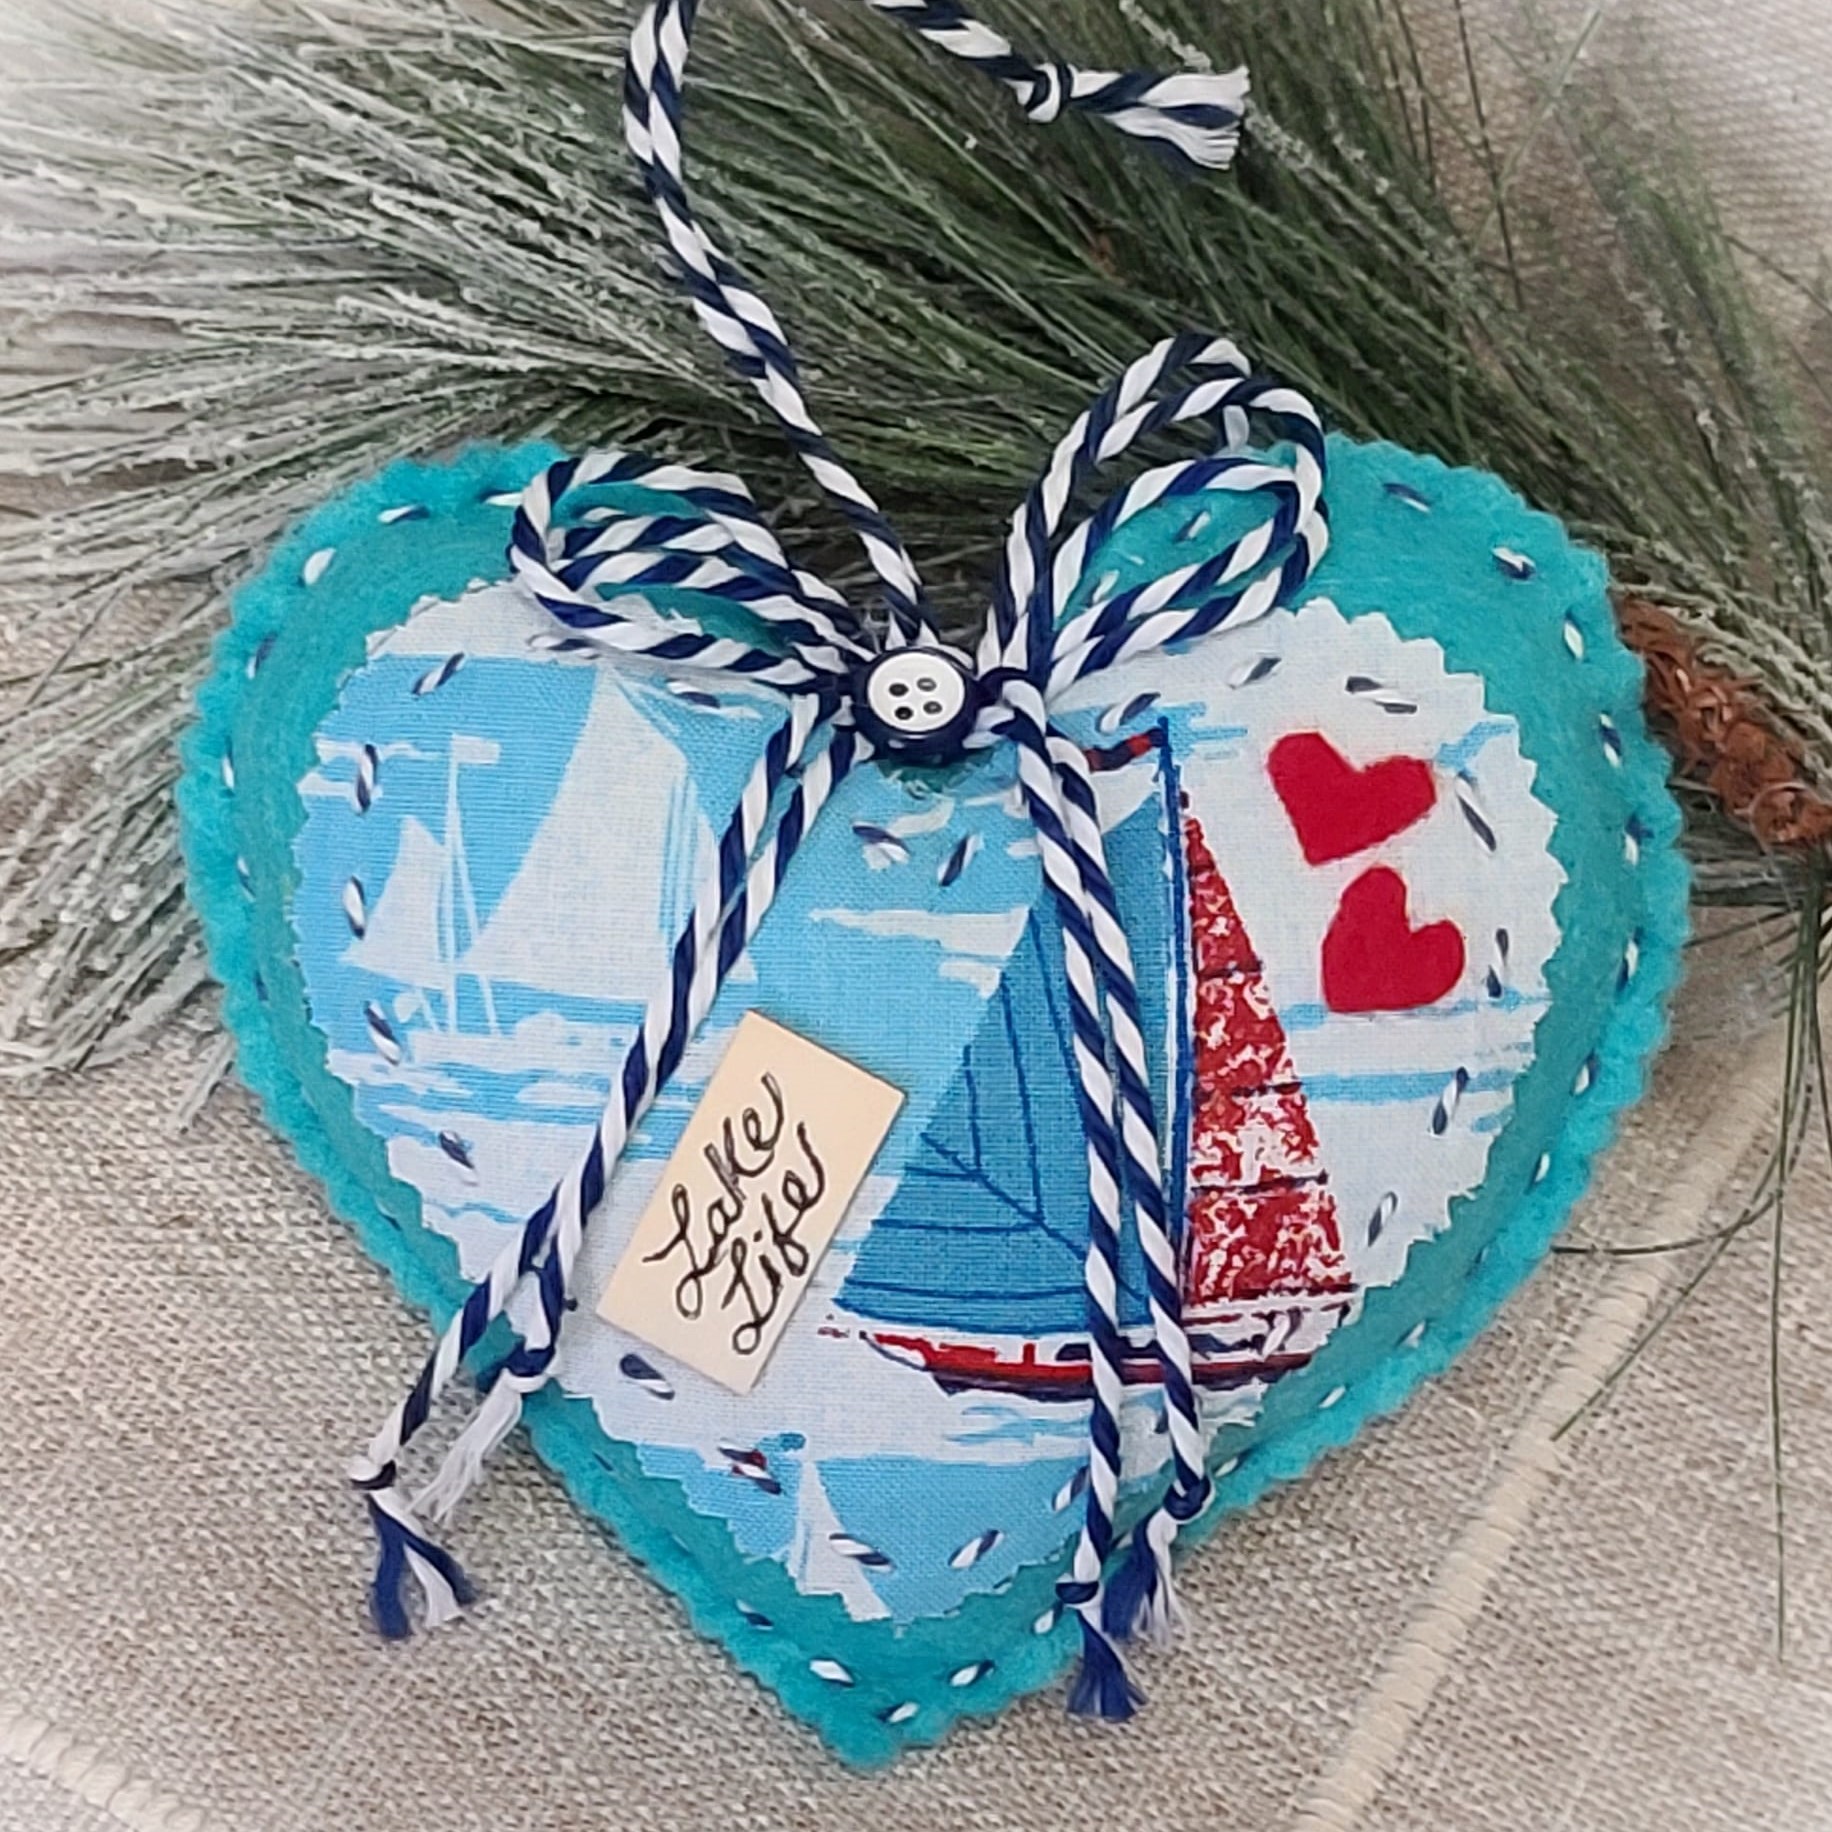 Lake Life material heart shaped ornament